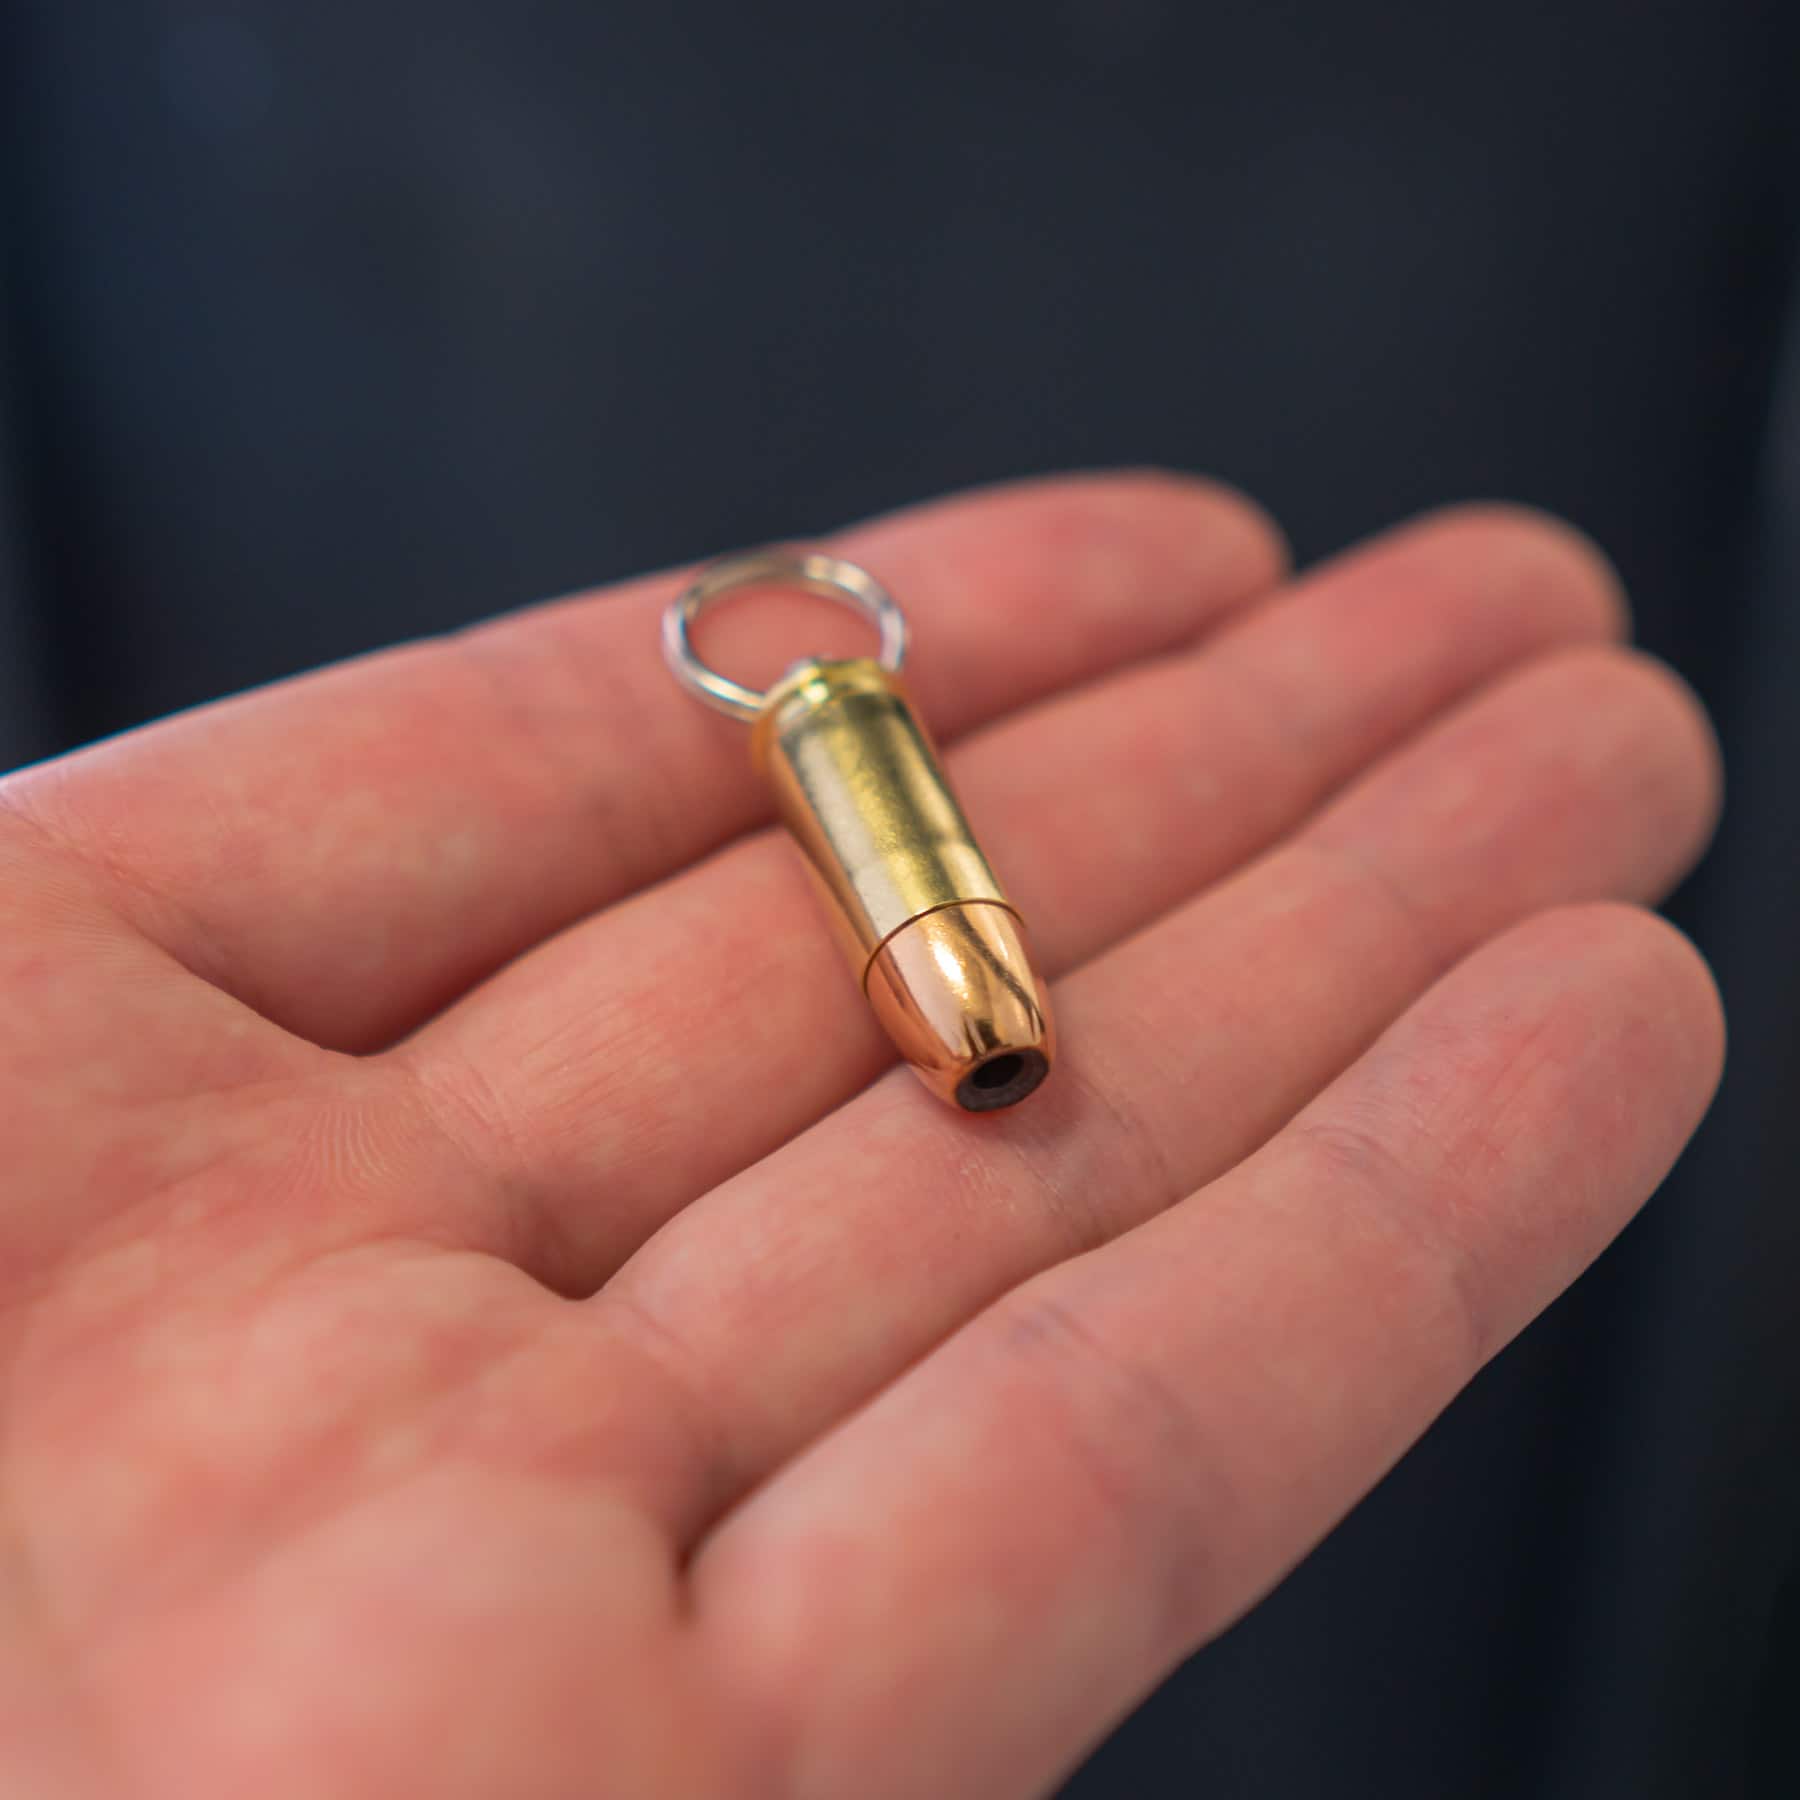 Patrone 9mm Pistole Kugel Hülse Fake PLUG Ohr Piercing Schmuck Gold Bullet Gun 